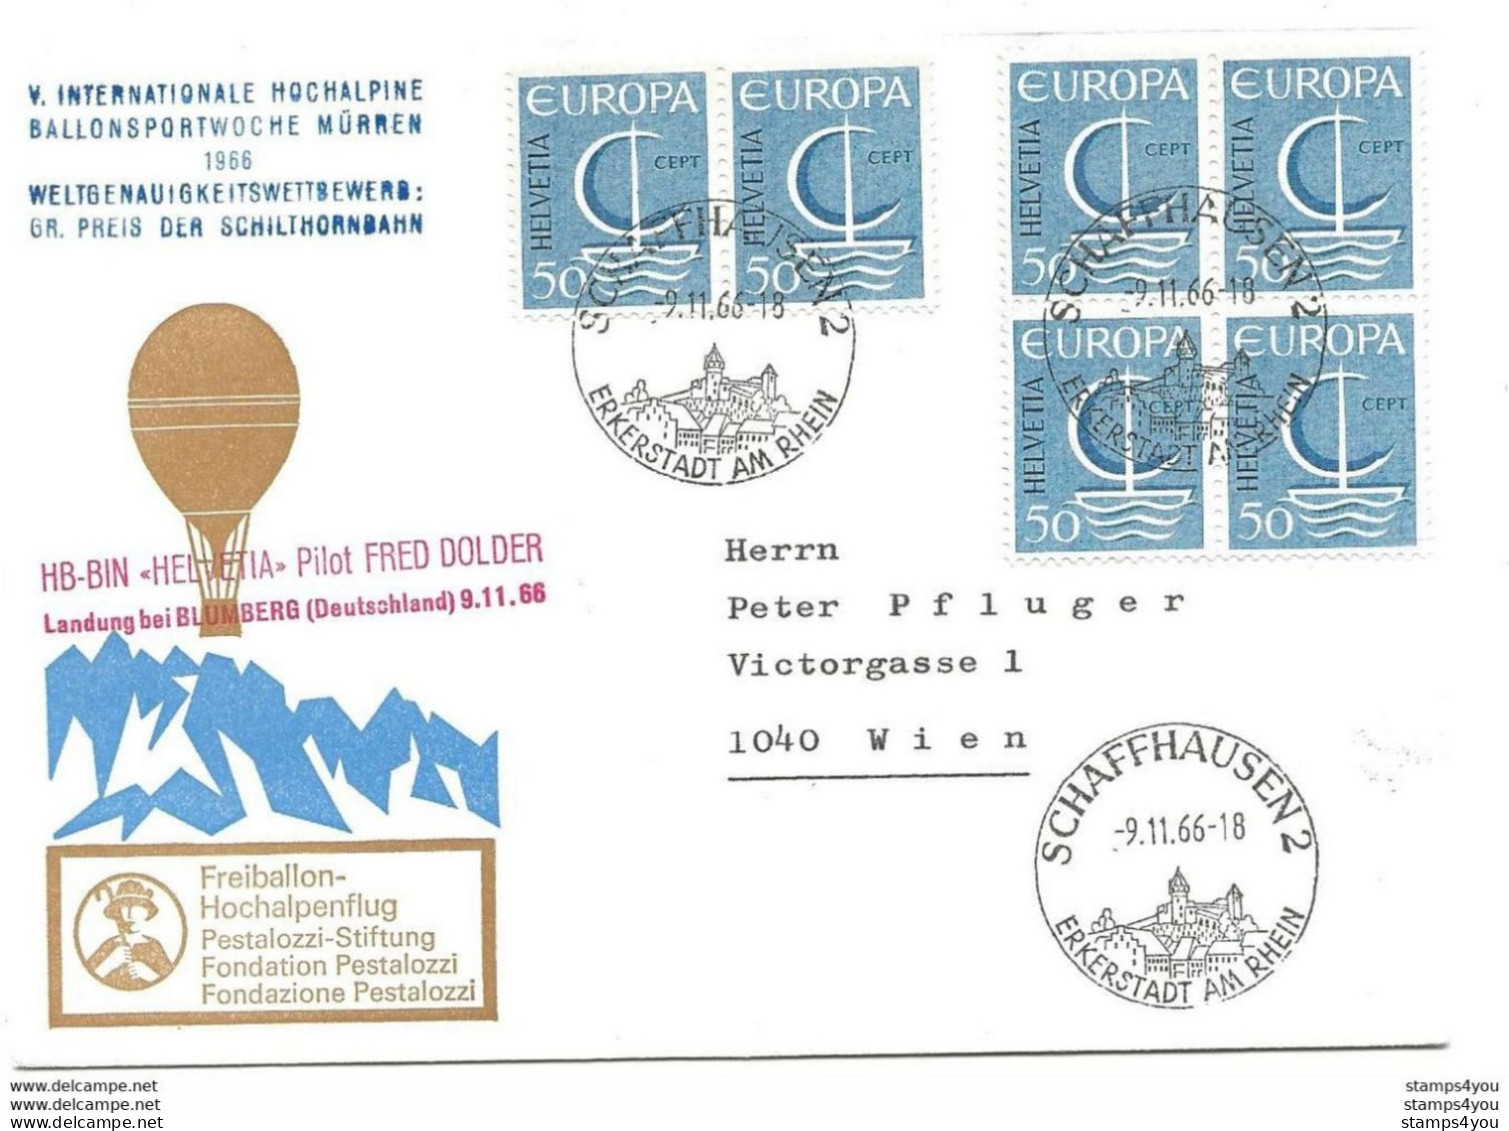 245 - 14 - Enveloppe Suisse Vol Ballon "Hochalpine Ballonsportwoche Mürren 1966" Affranchissement Timbres Europa - European Ideas